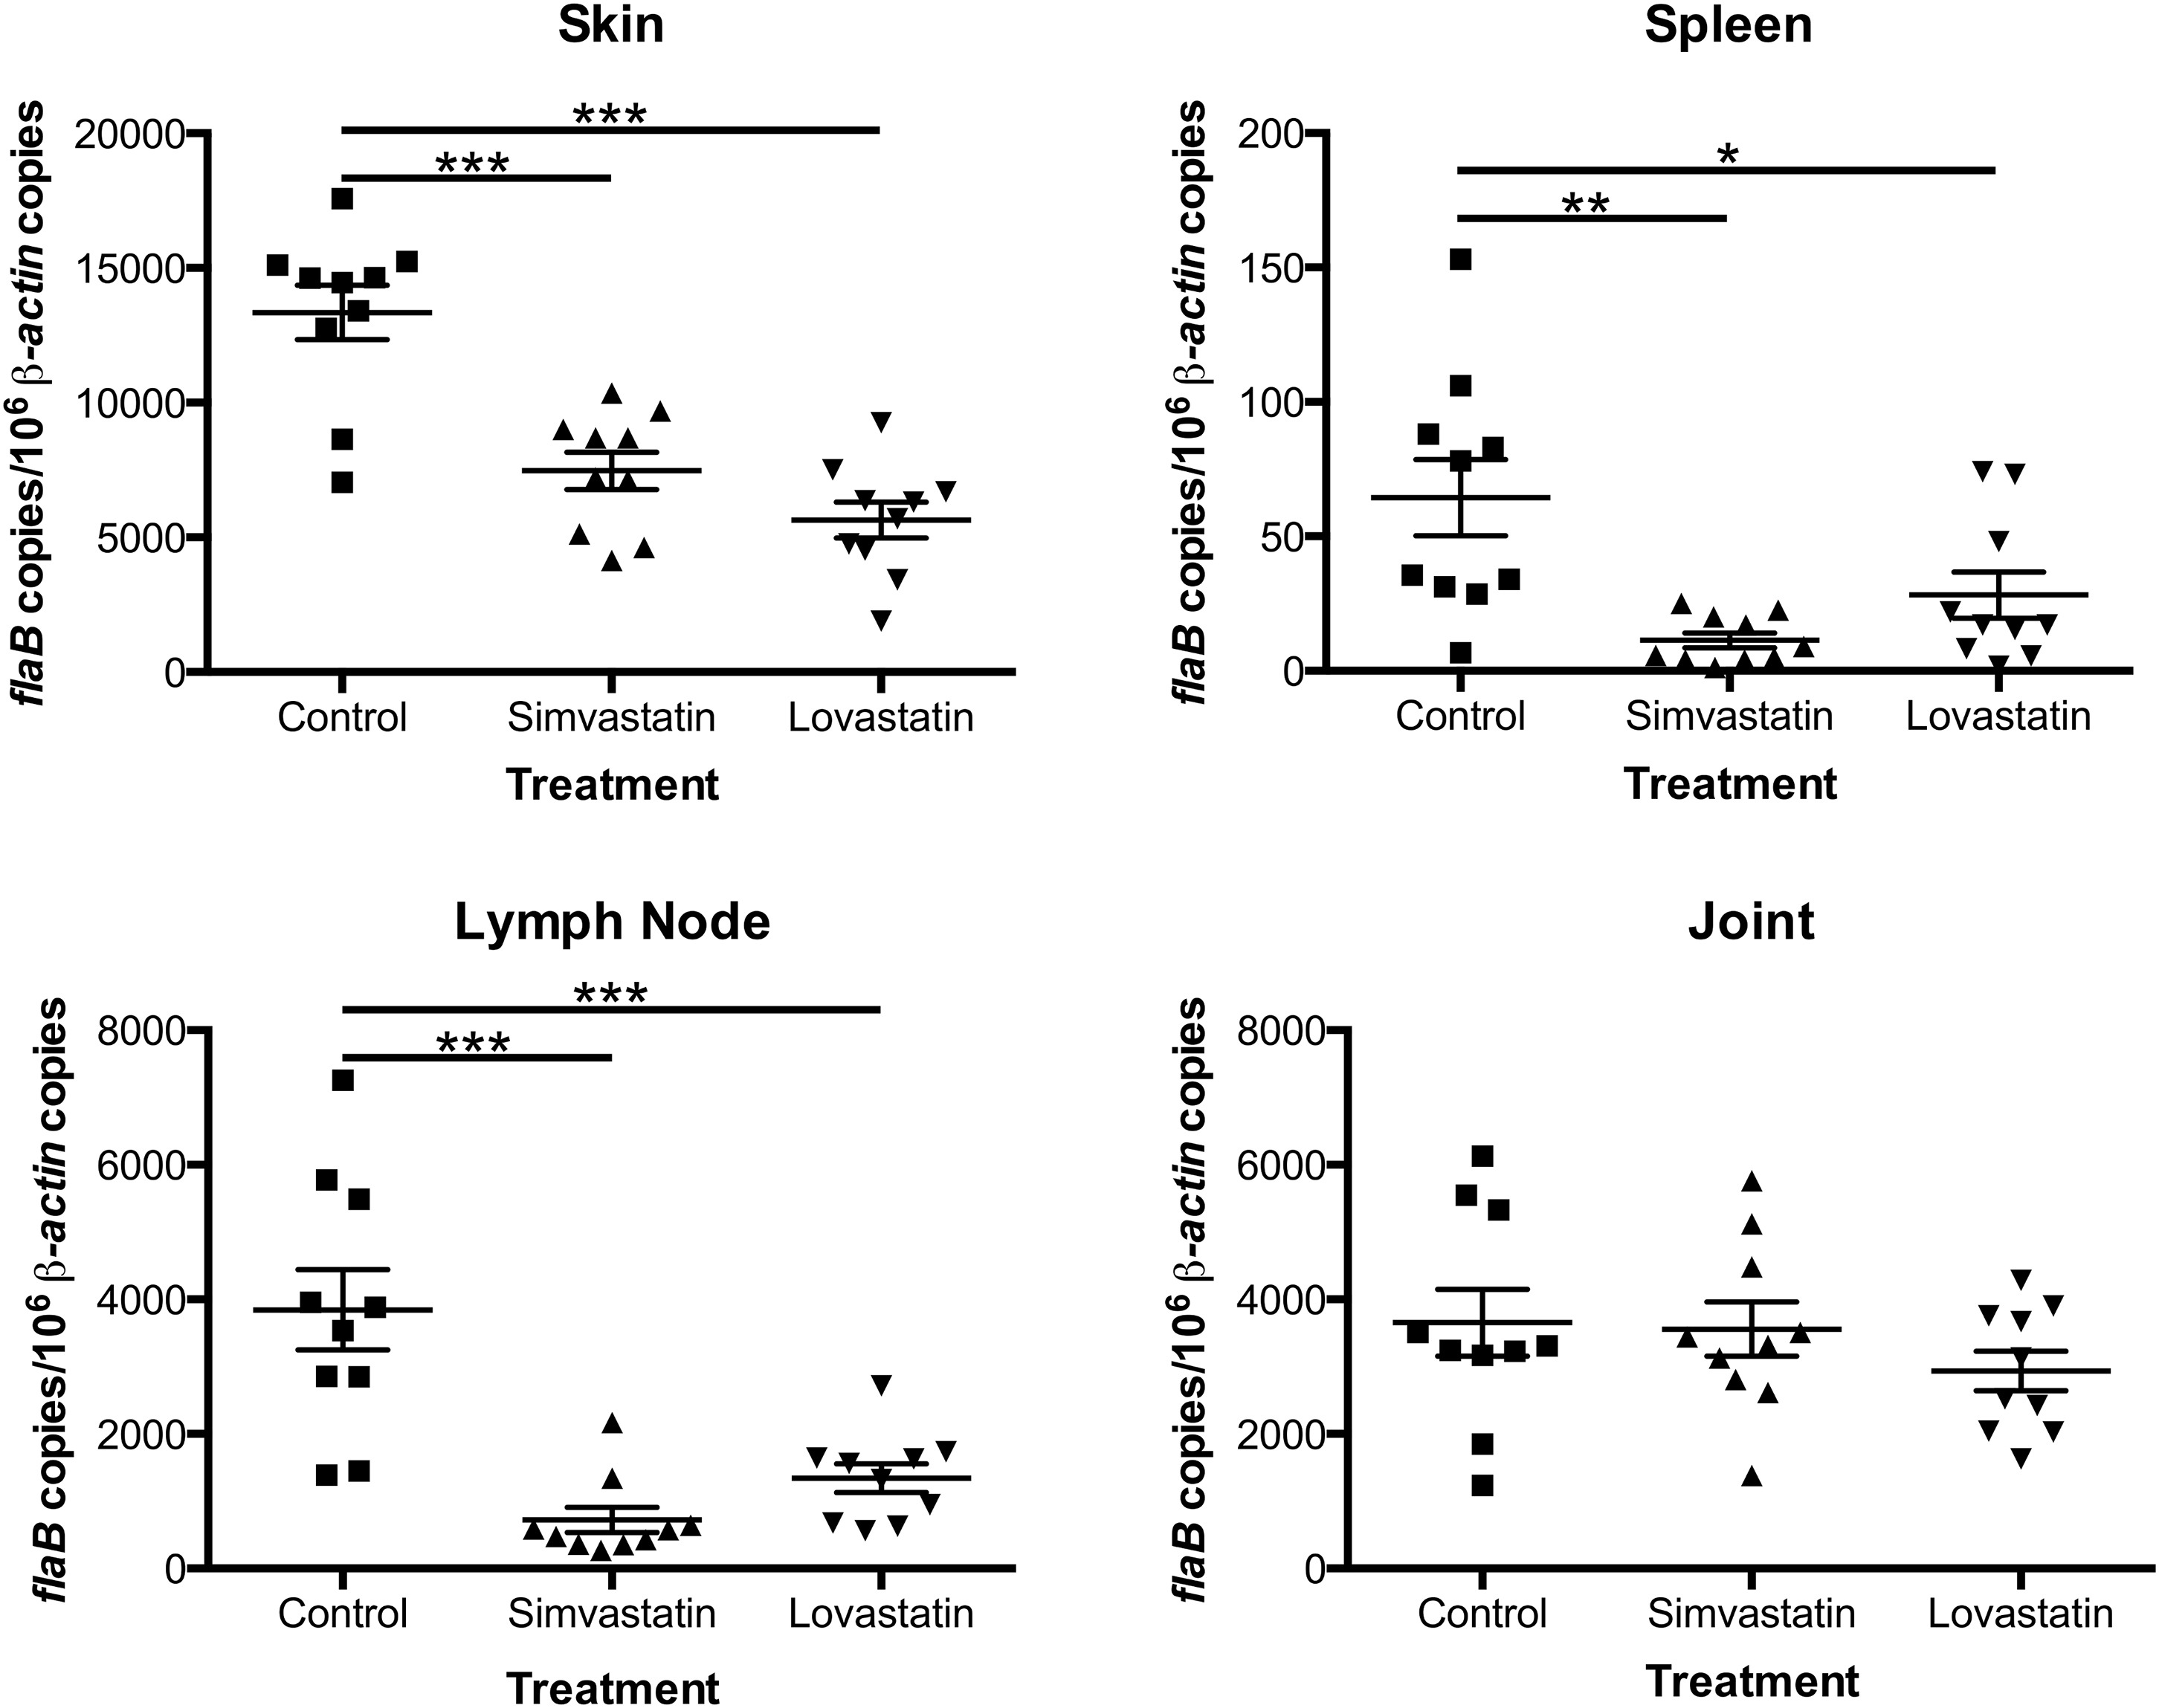 Statins reduce spirochetal burden and modulate immune responses in the C3H/HeN mouse model of Lyme disease